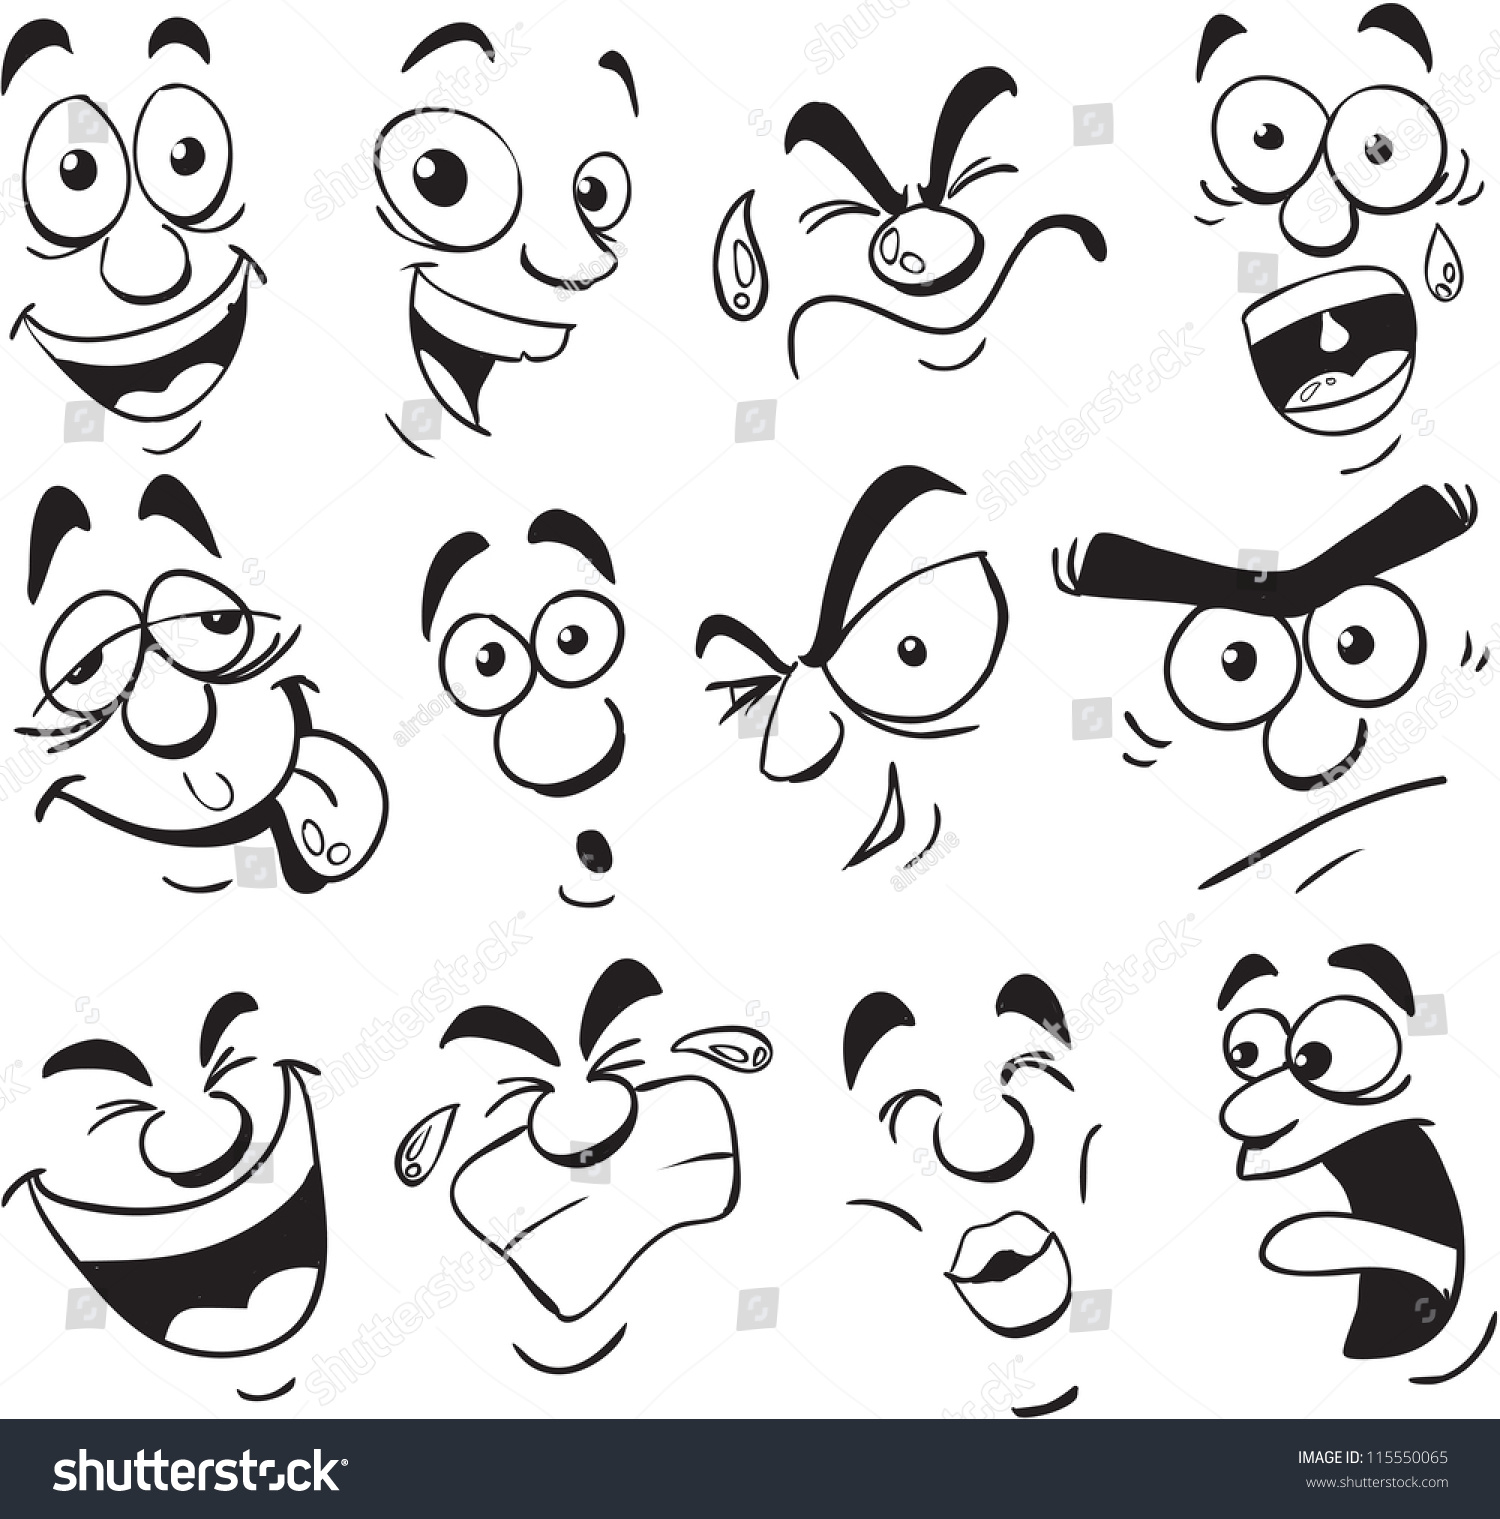 Facial Expression Comic Cartoon Style Stock Vector 115550065 - Shutterstock